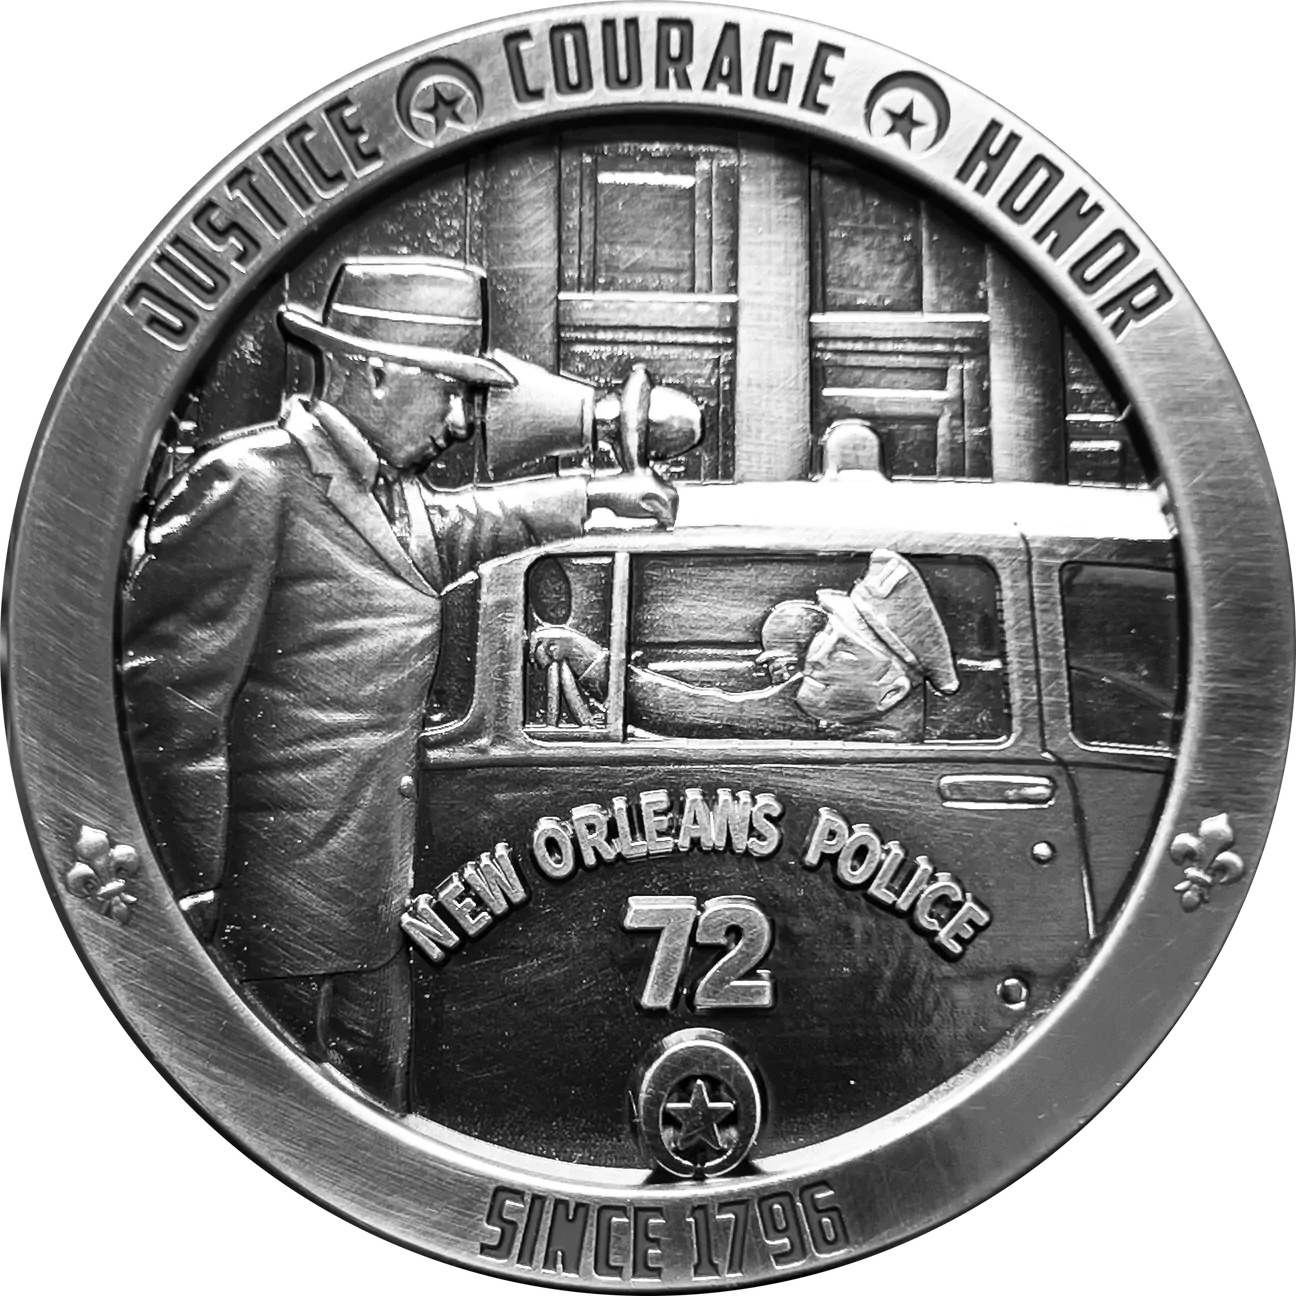 Vintage stye New Orleans Police Department Challenge Coin NOLA NOPD GL11-005